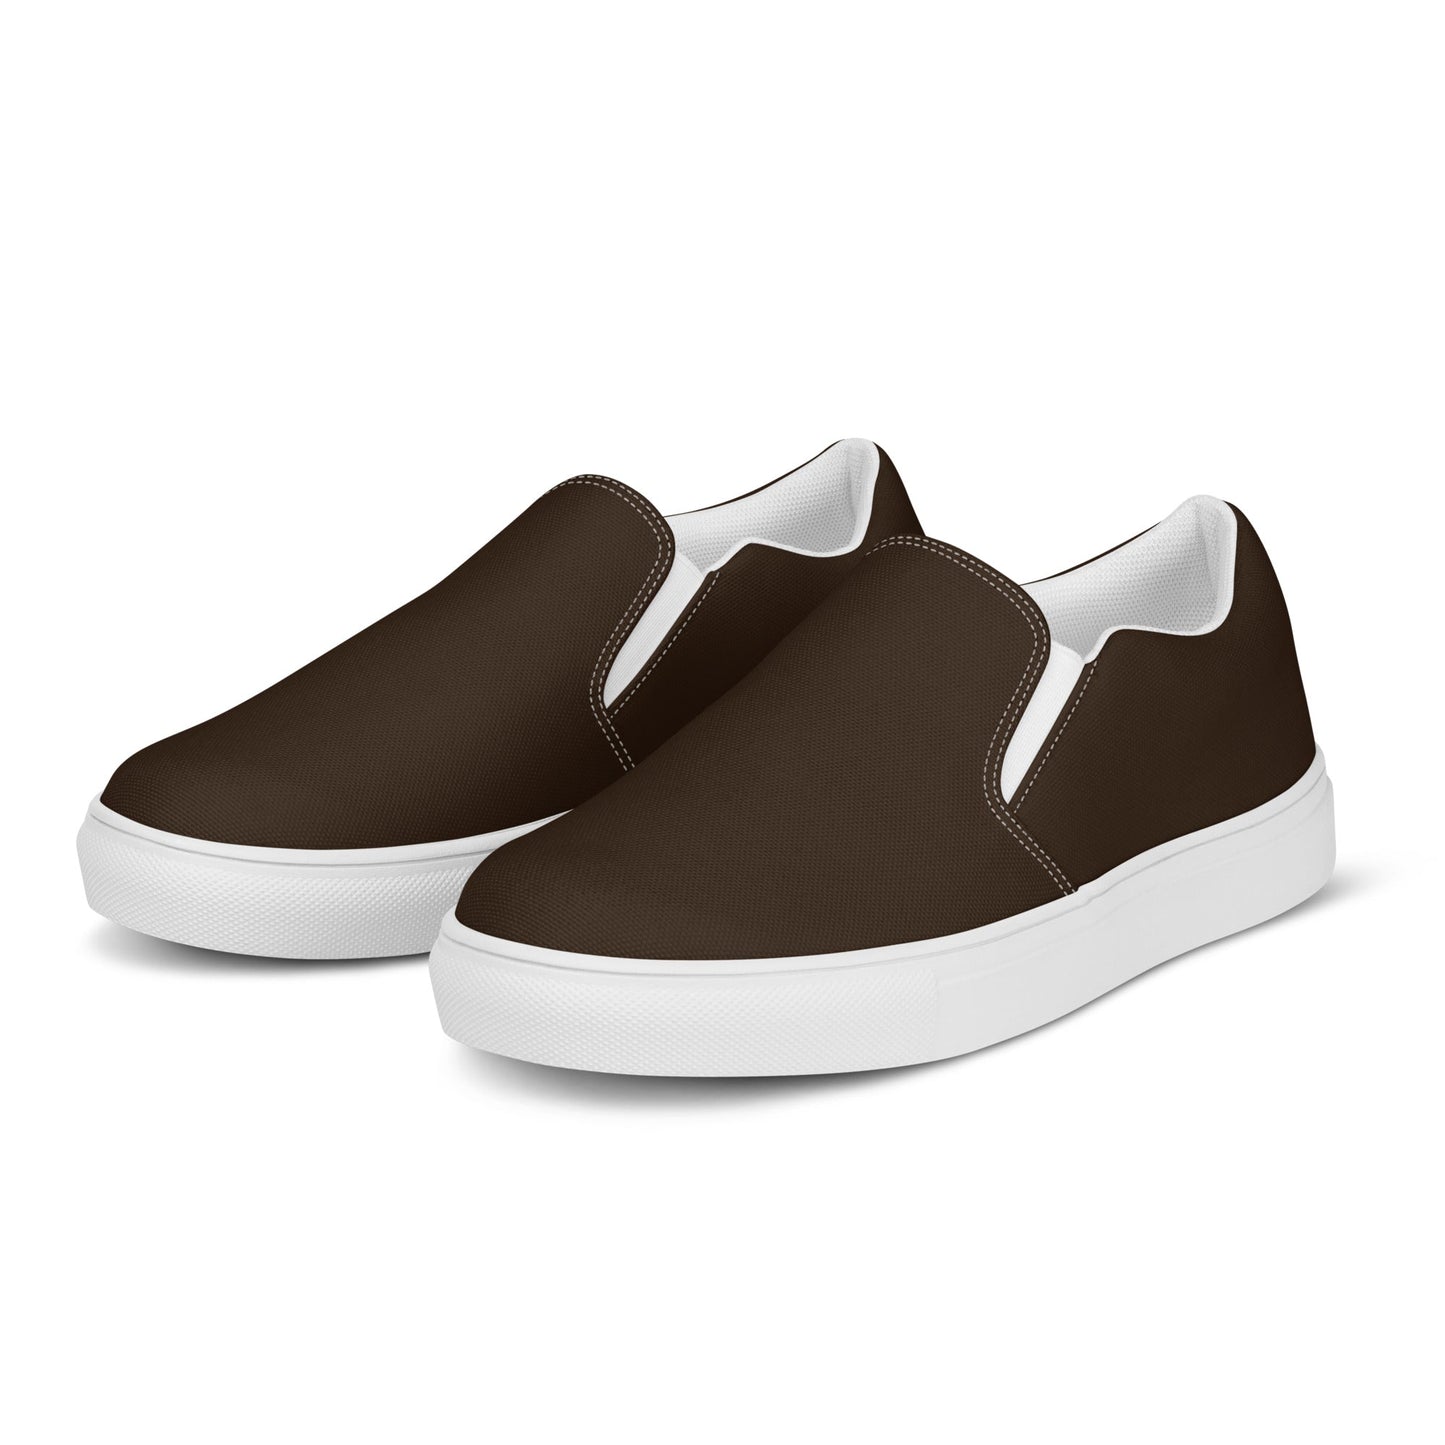 klasneakers Men’s slip-on canvas shoes - Chocolate Cherry